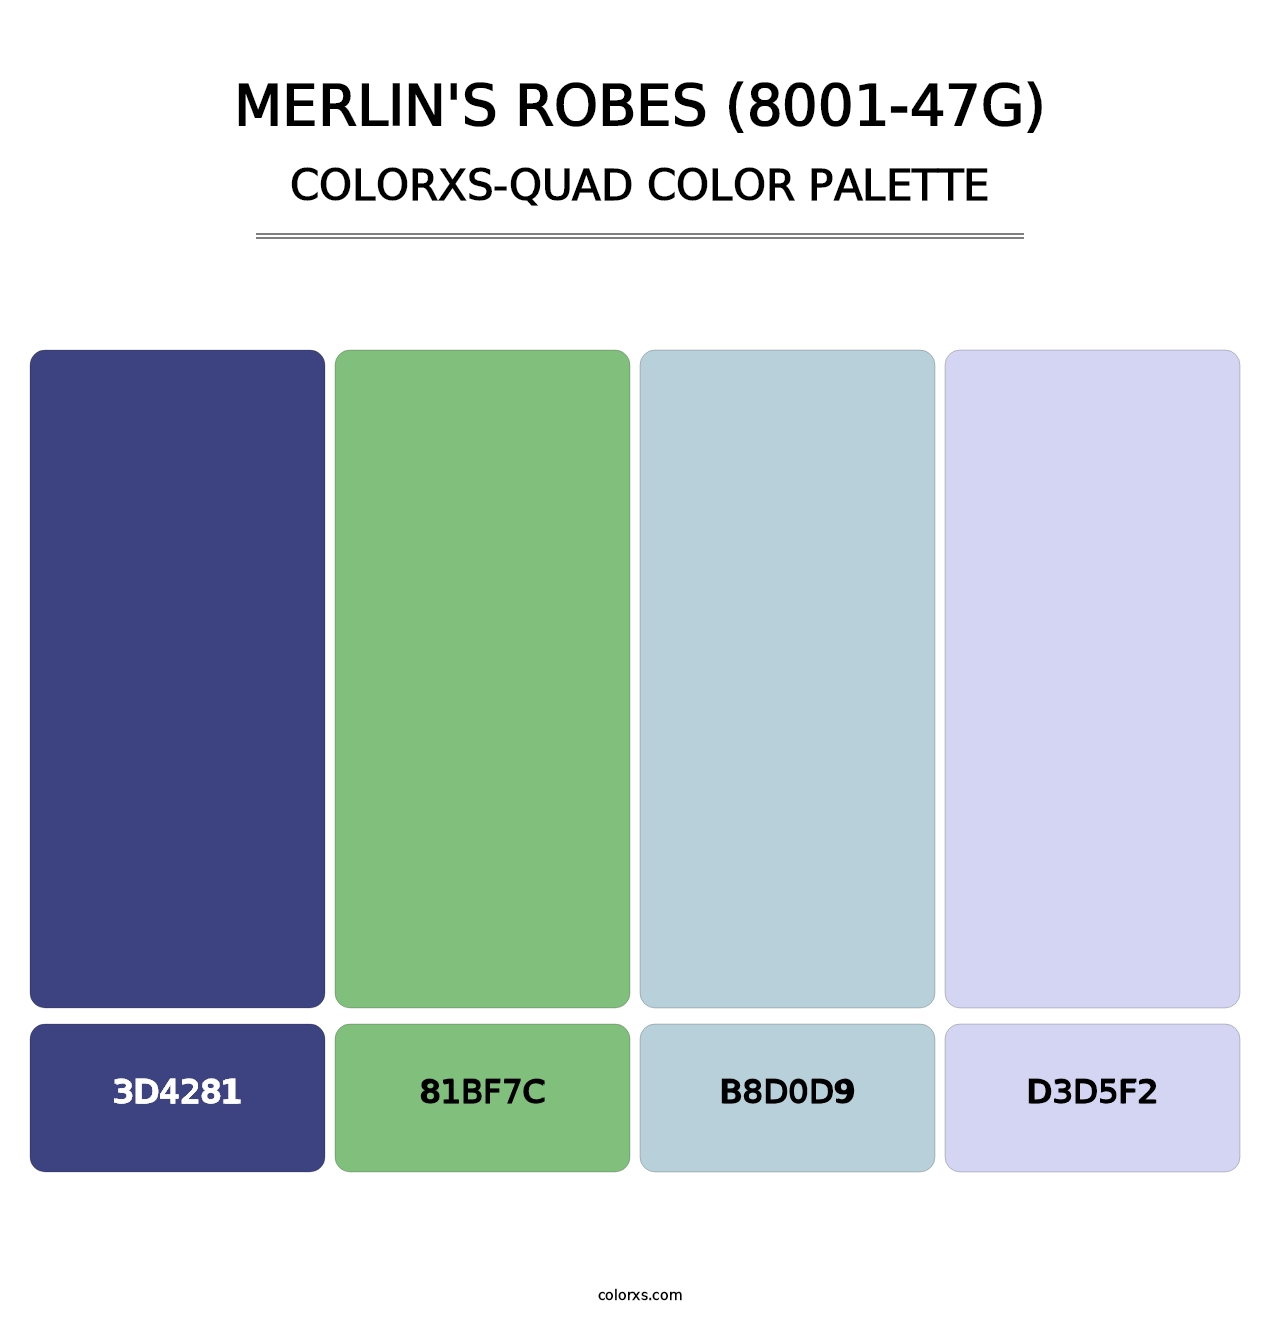 Merlin's Robes (8001-47G) - Colorxs Quad Palette